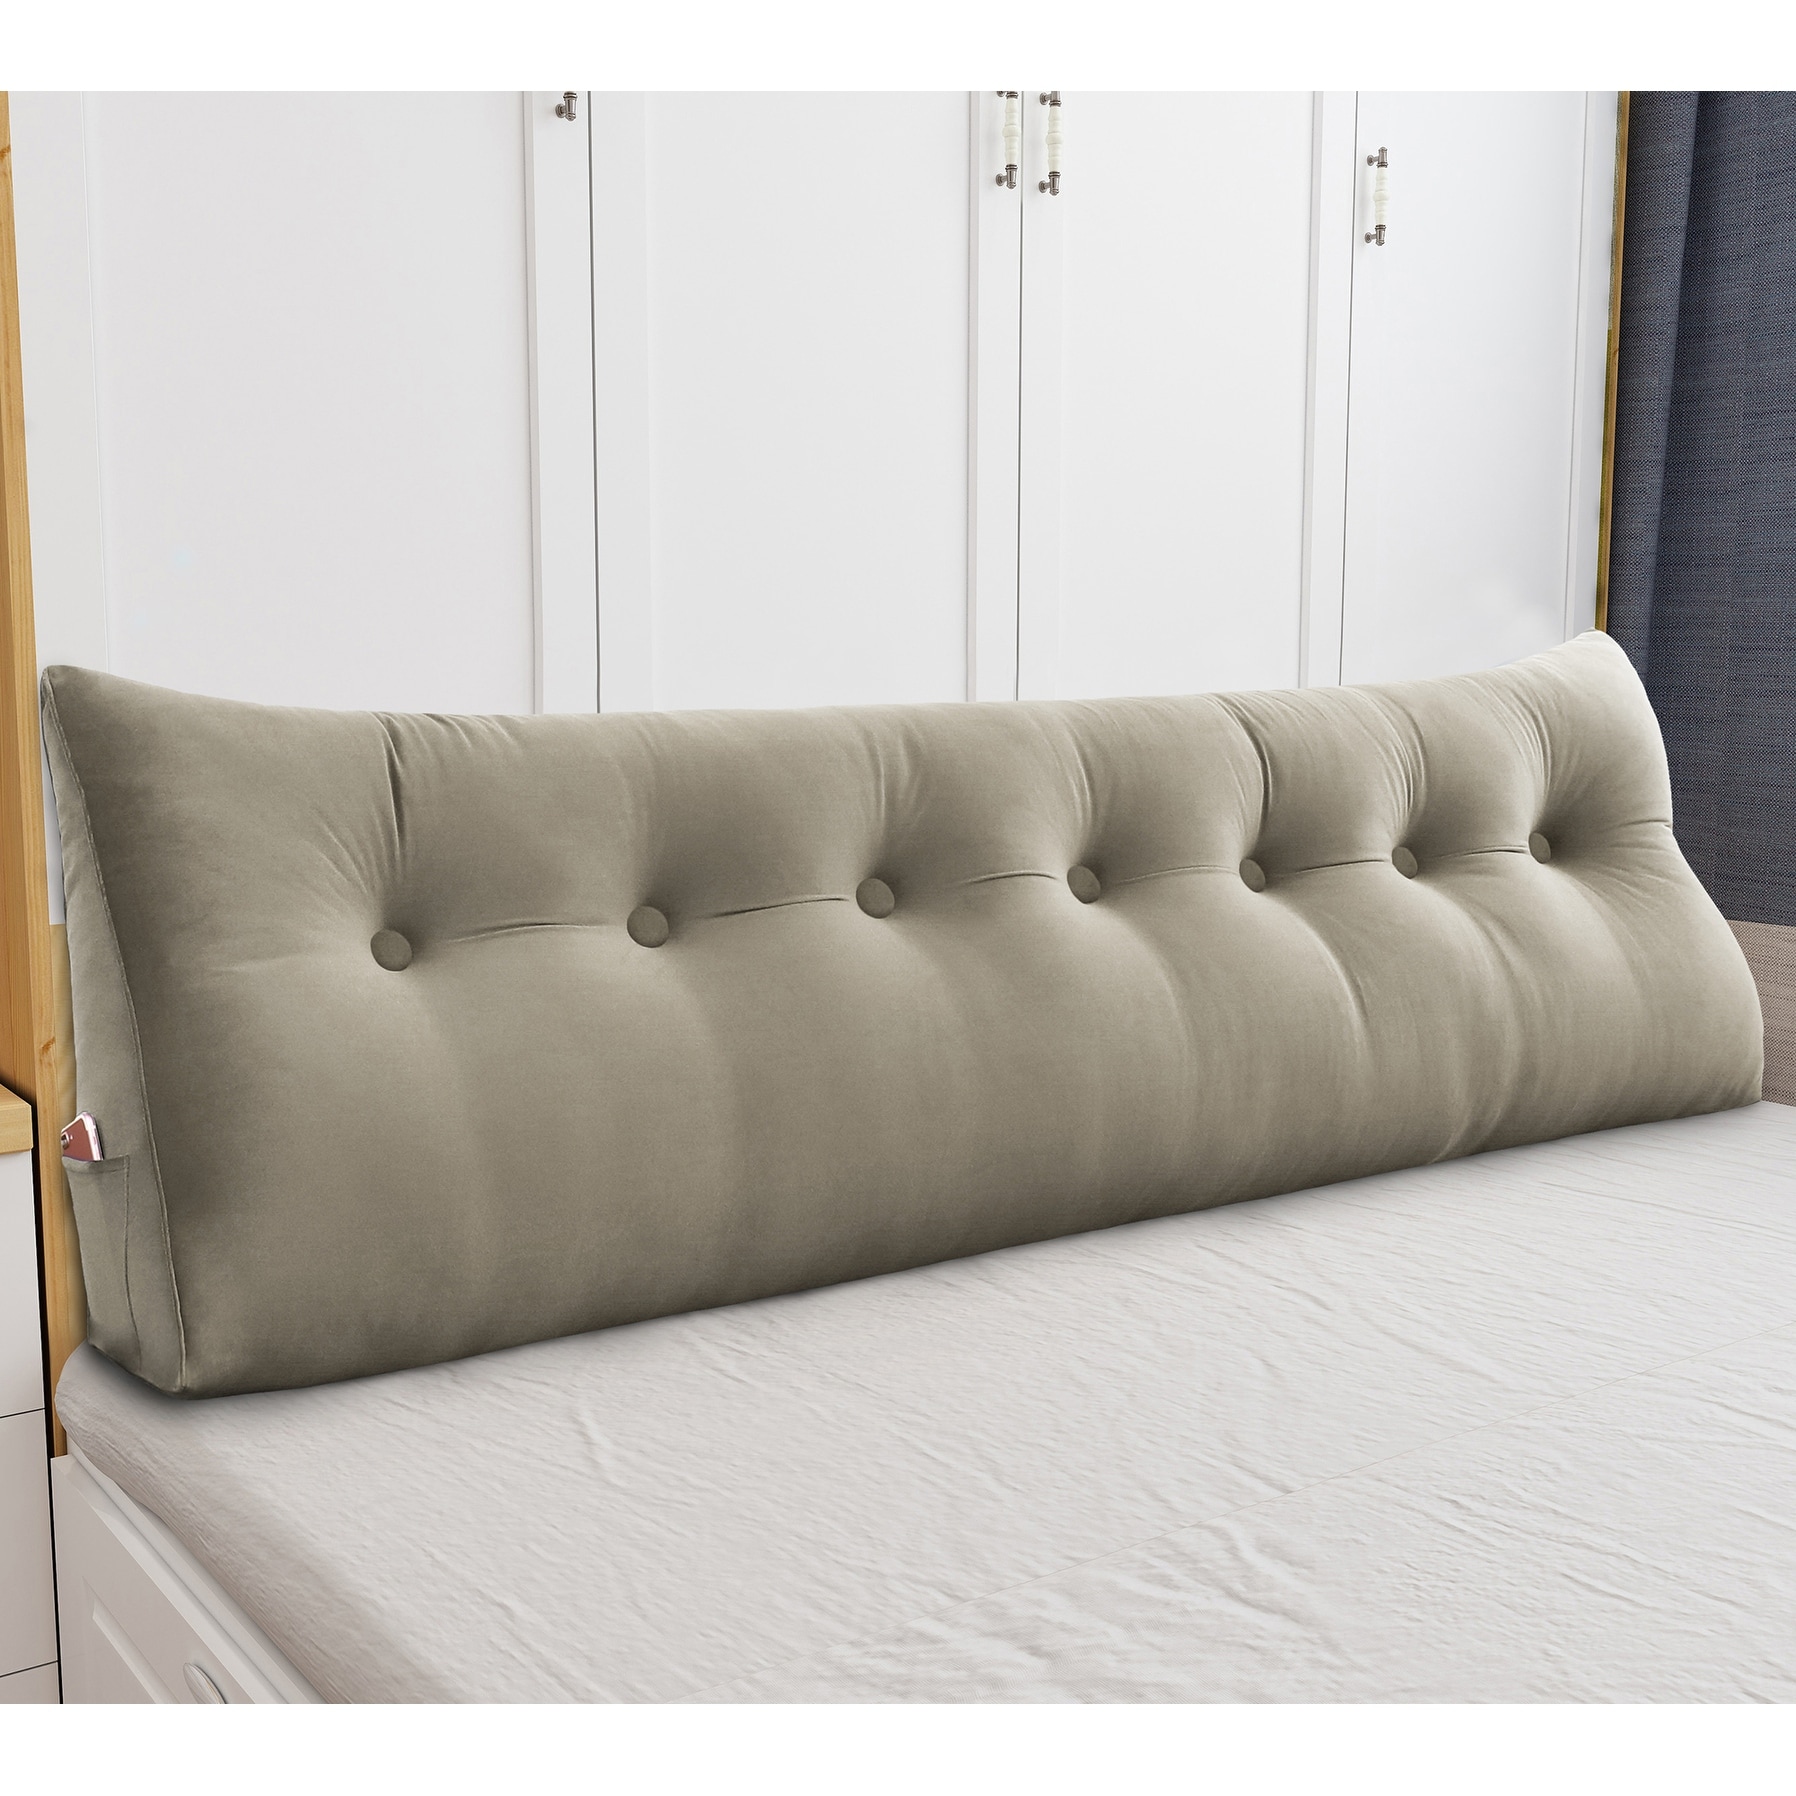 Removable Comfort Bed Rest Pillow Big Wedge Backrest Lounge Sofa